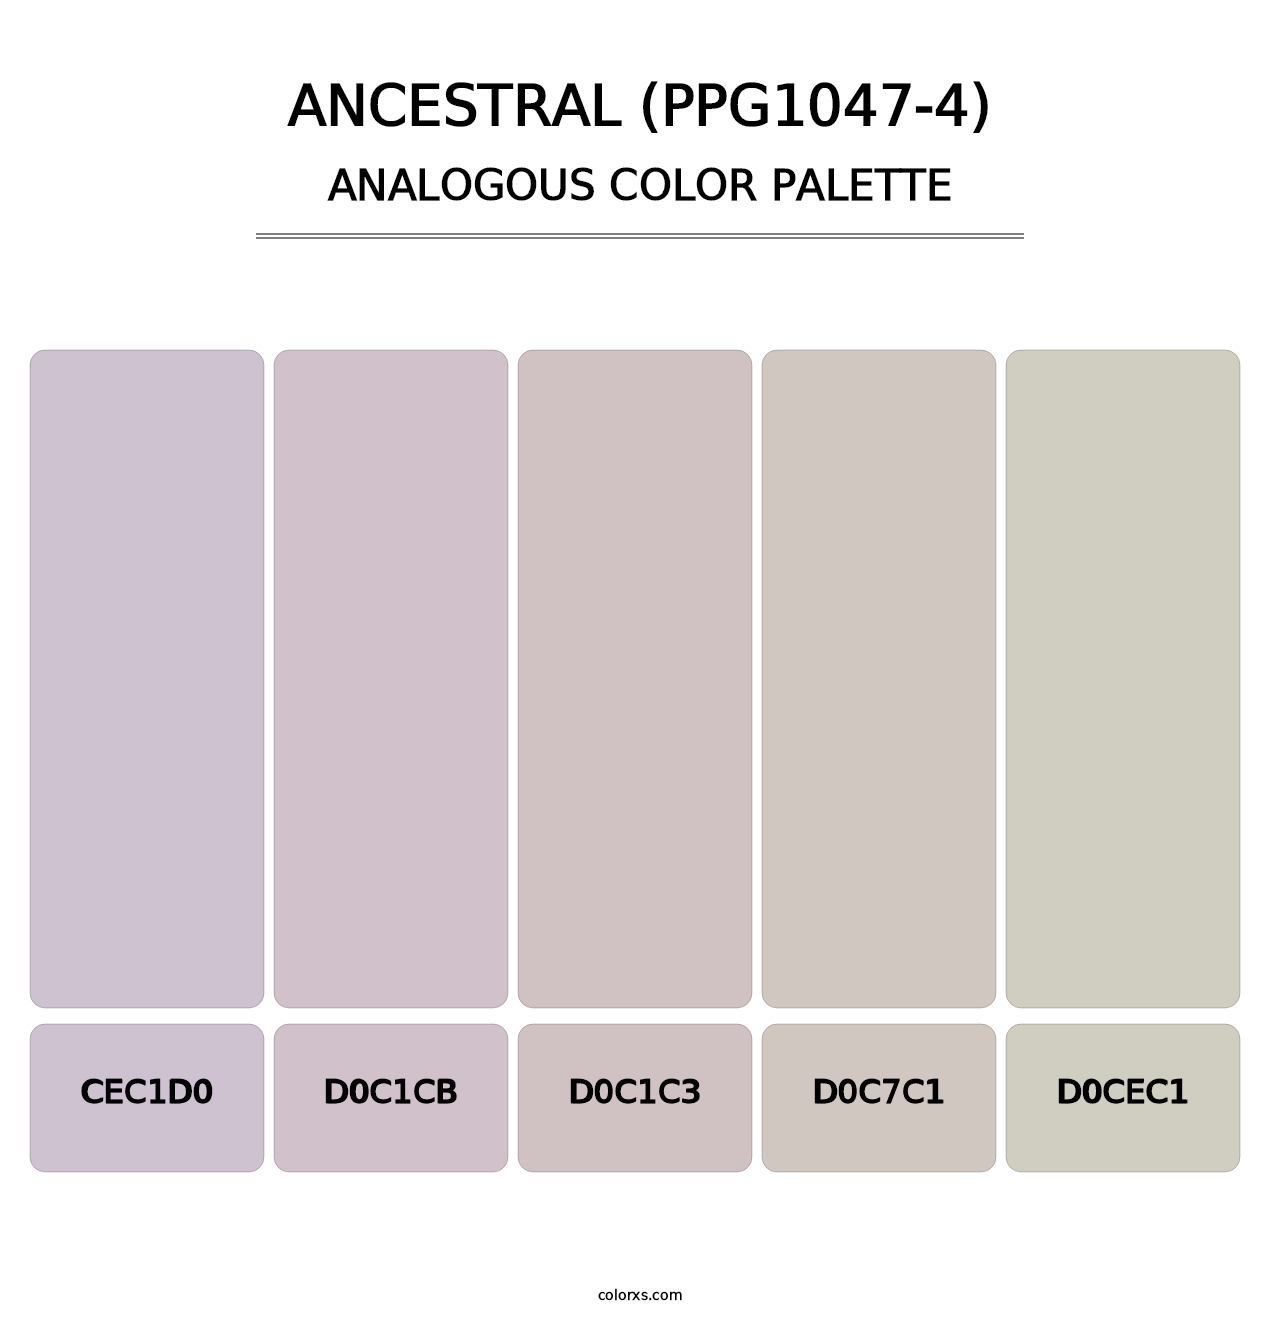 Ancestral (PPG1047-4) - Analogous Color Palette